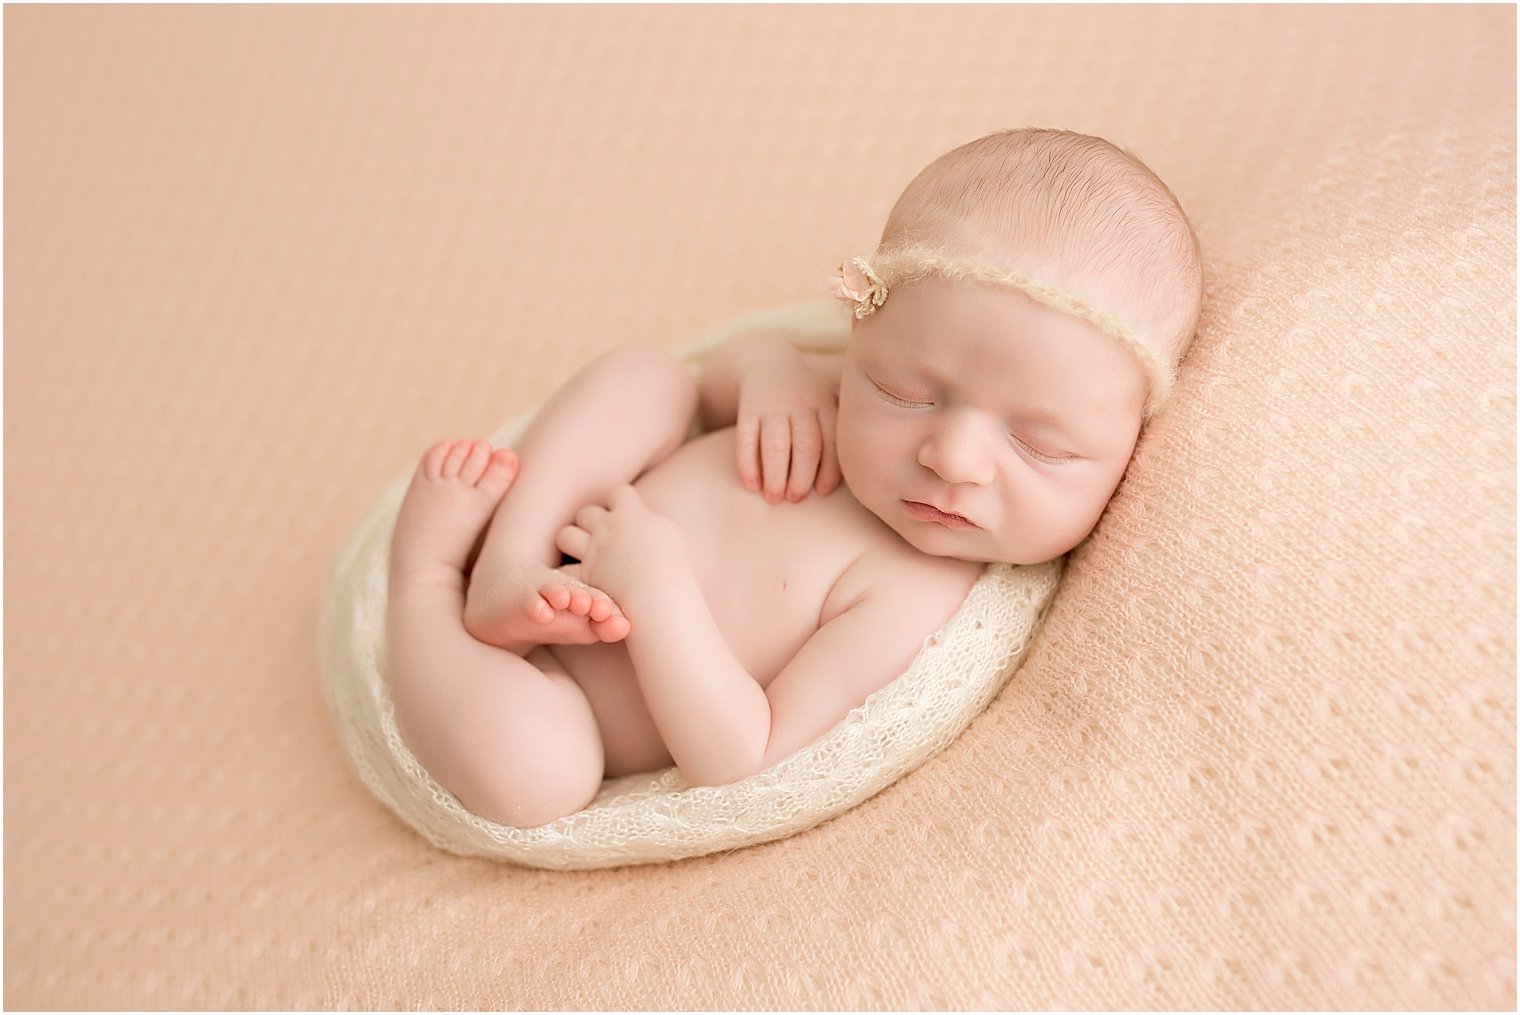 Newborn girl in Huck Finn pose